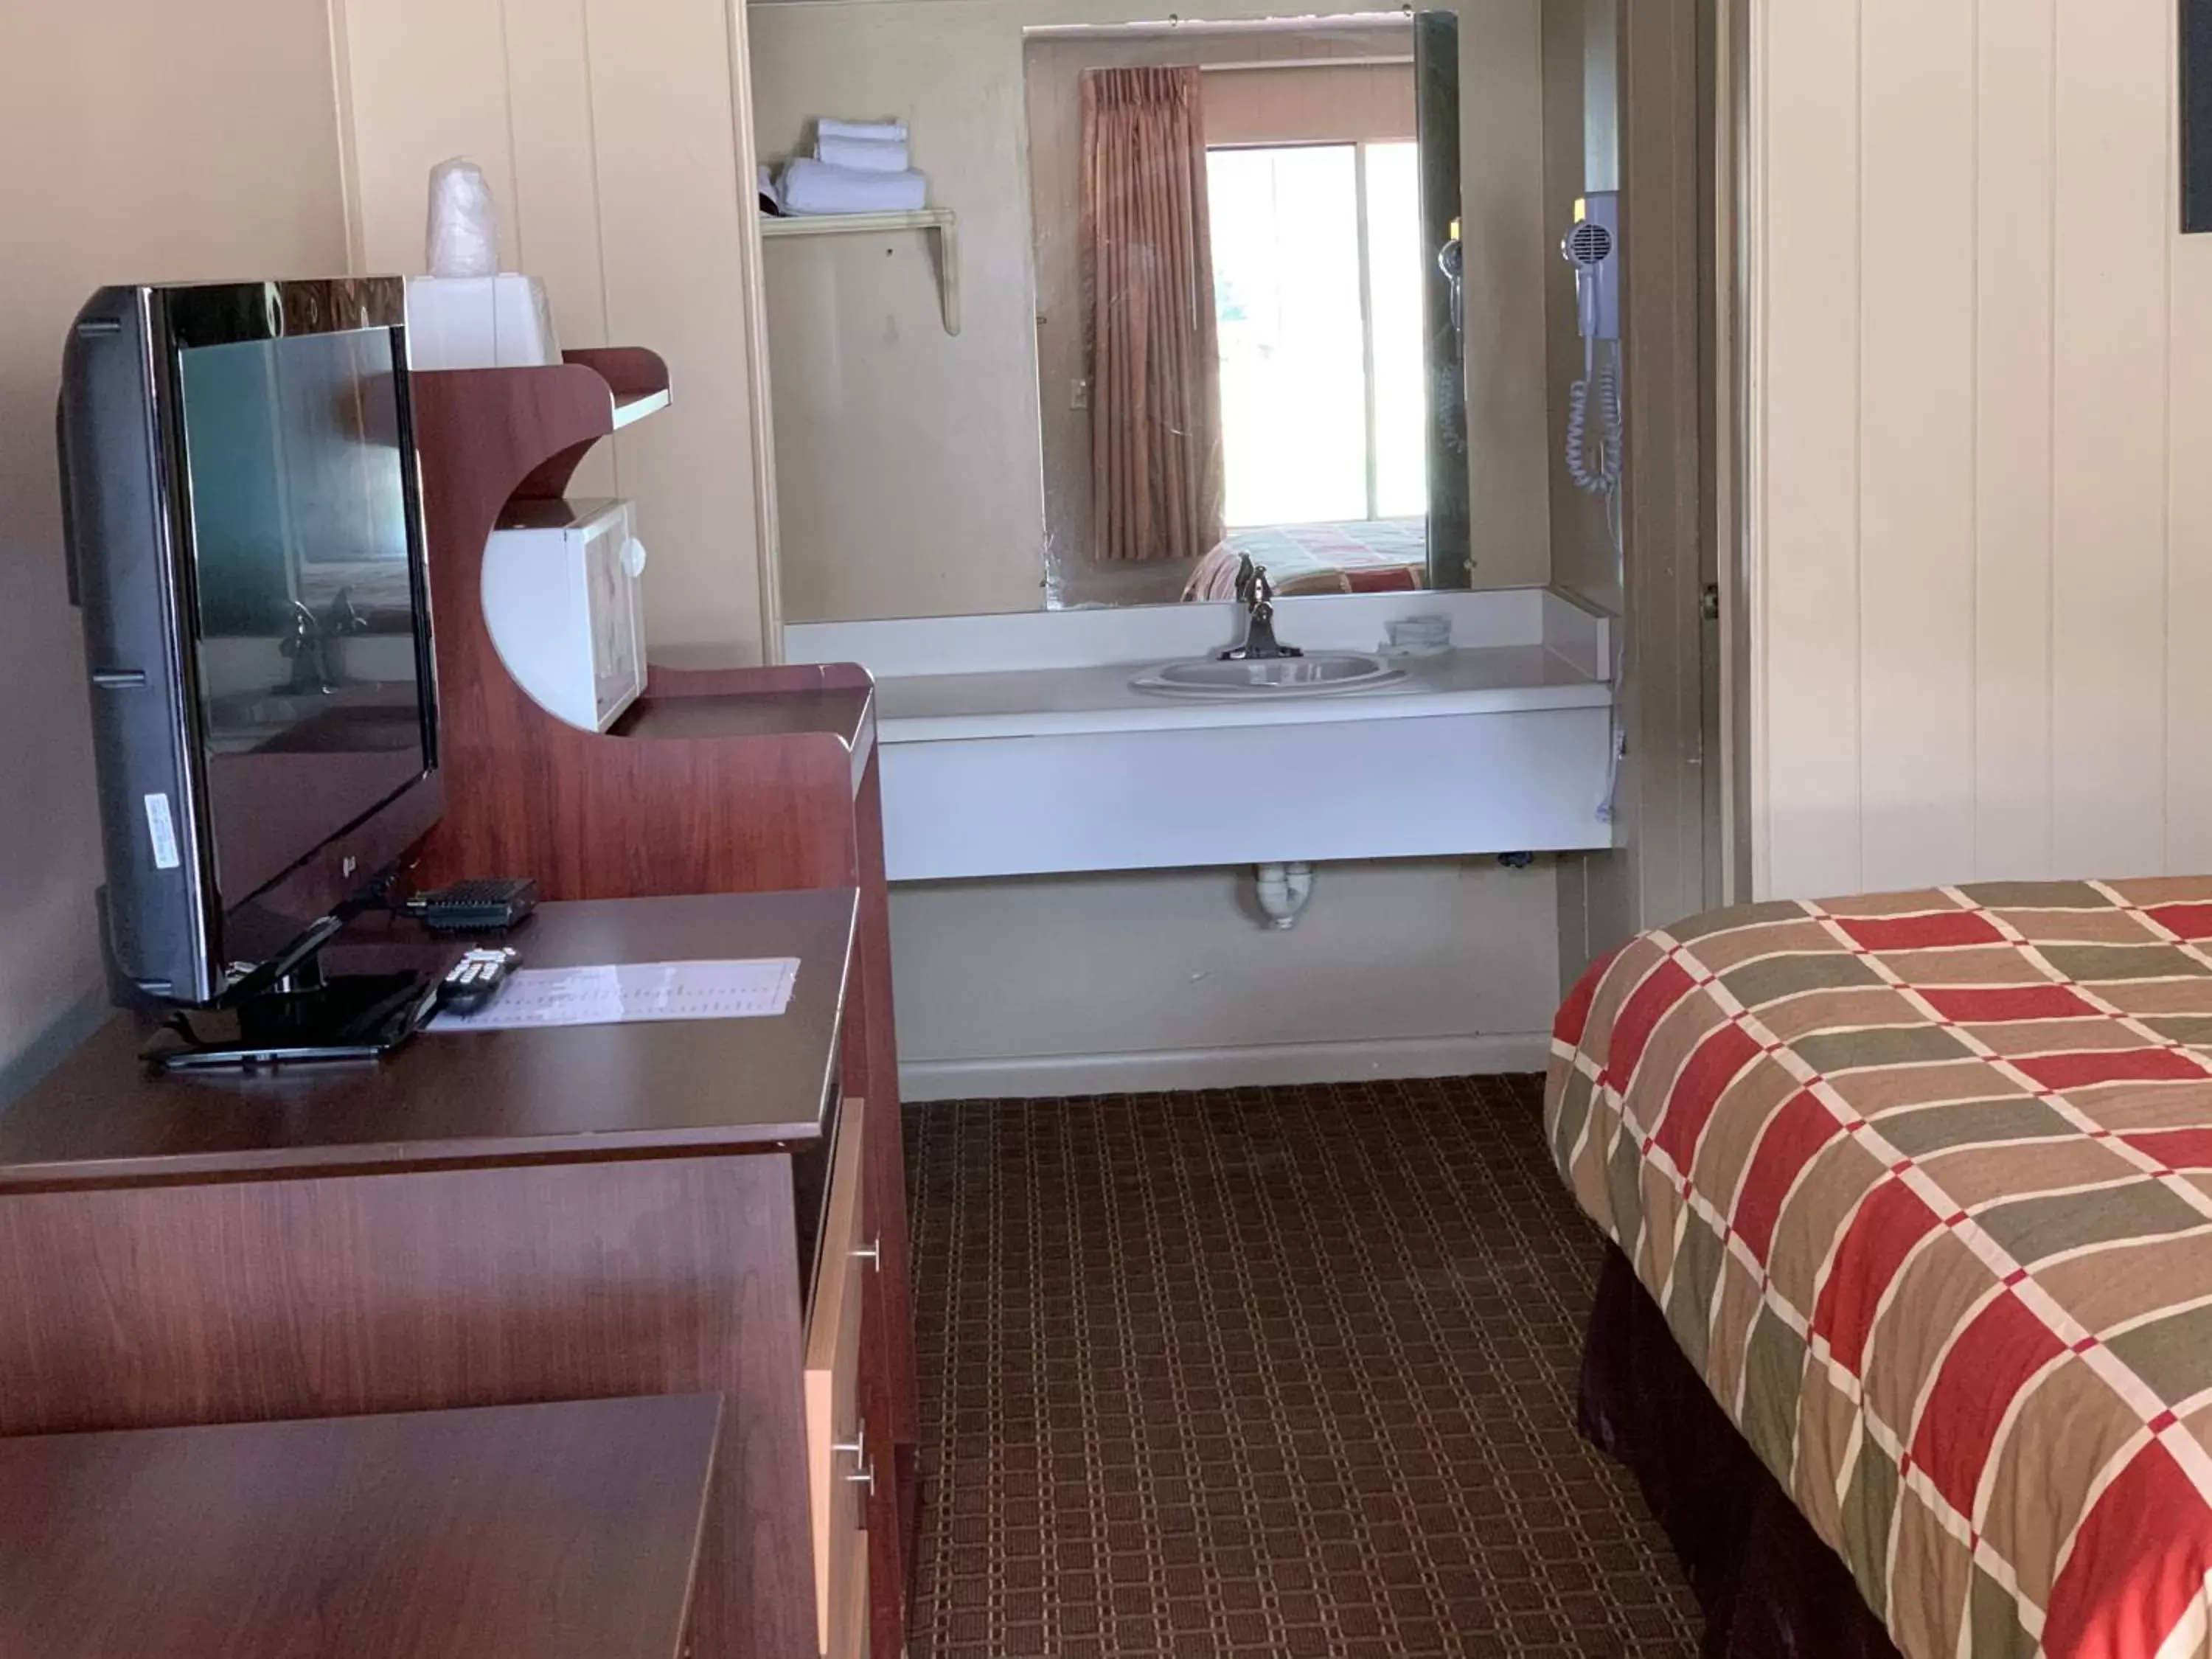 Bedroom, Bathroom in Travelowes Motel - Maggie Valley